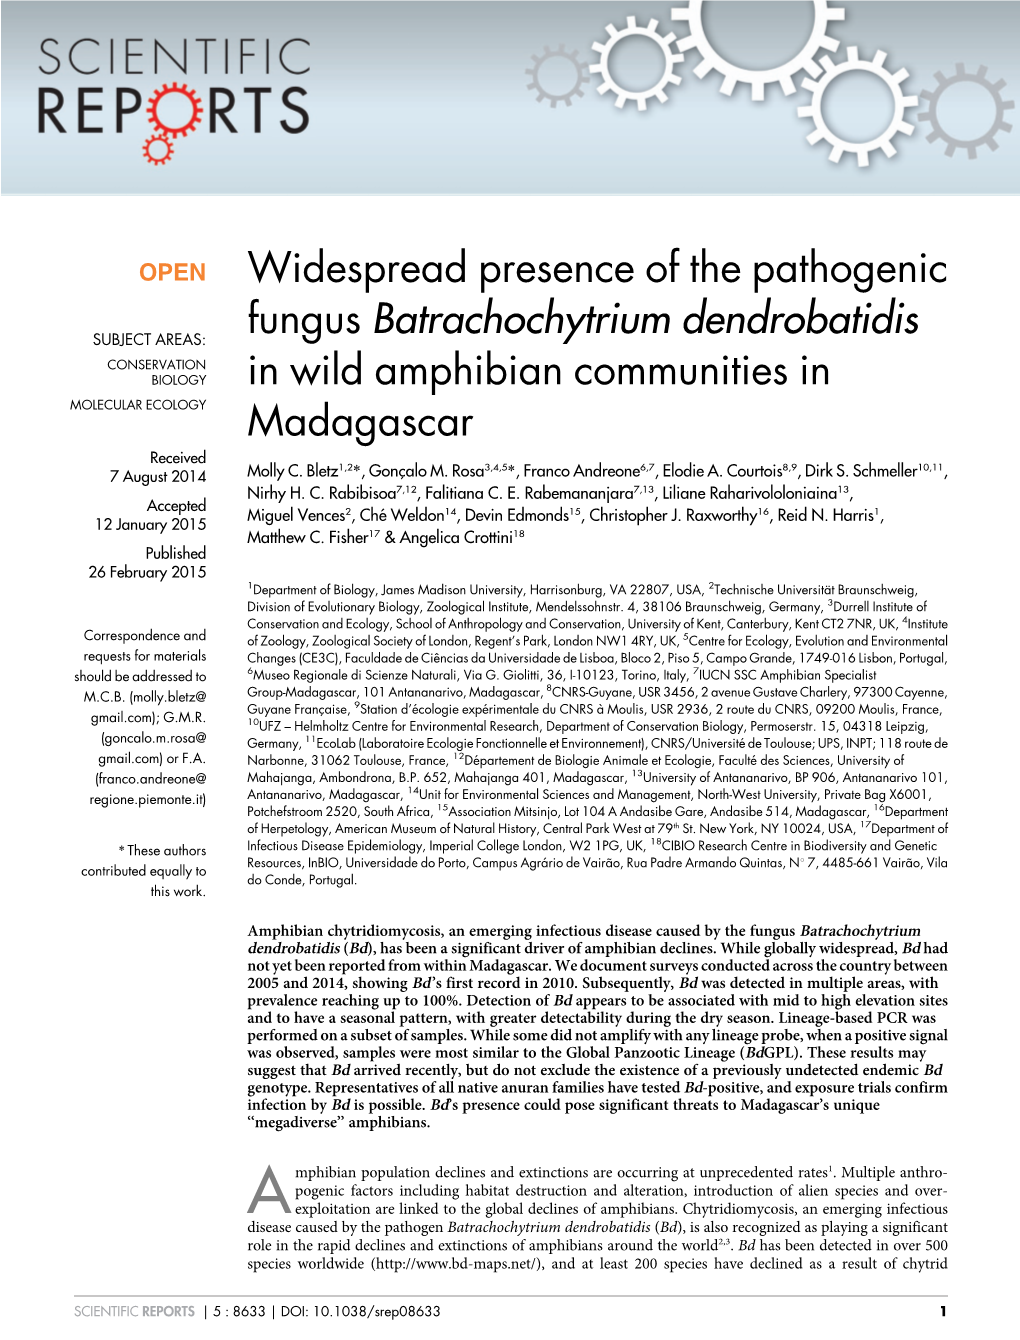 Widespread Presence of the Pathogenic Fungus Batrachochytrium Dendrobatidis in Wild Amphibian Communities in Madagascar